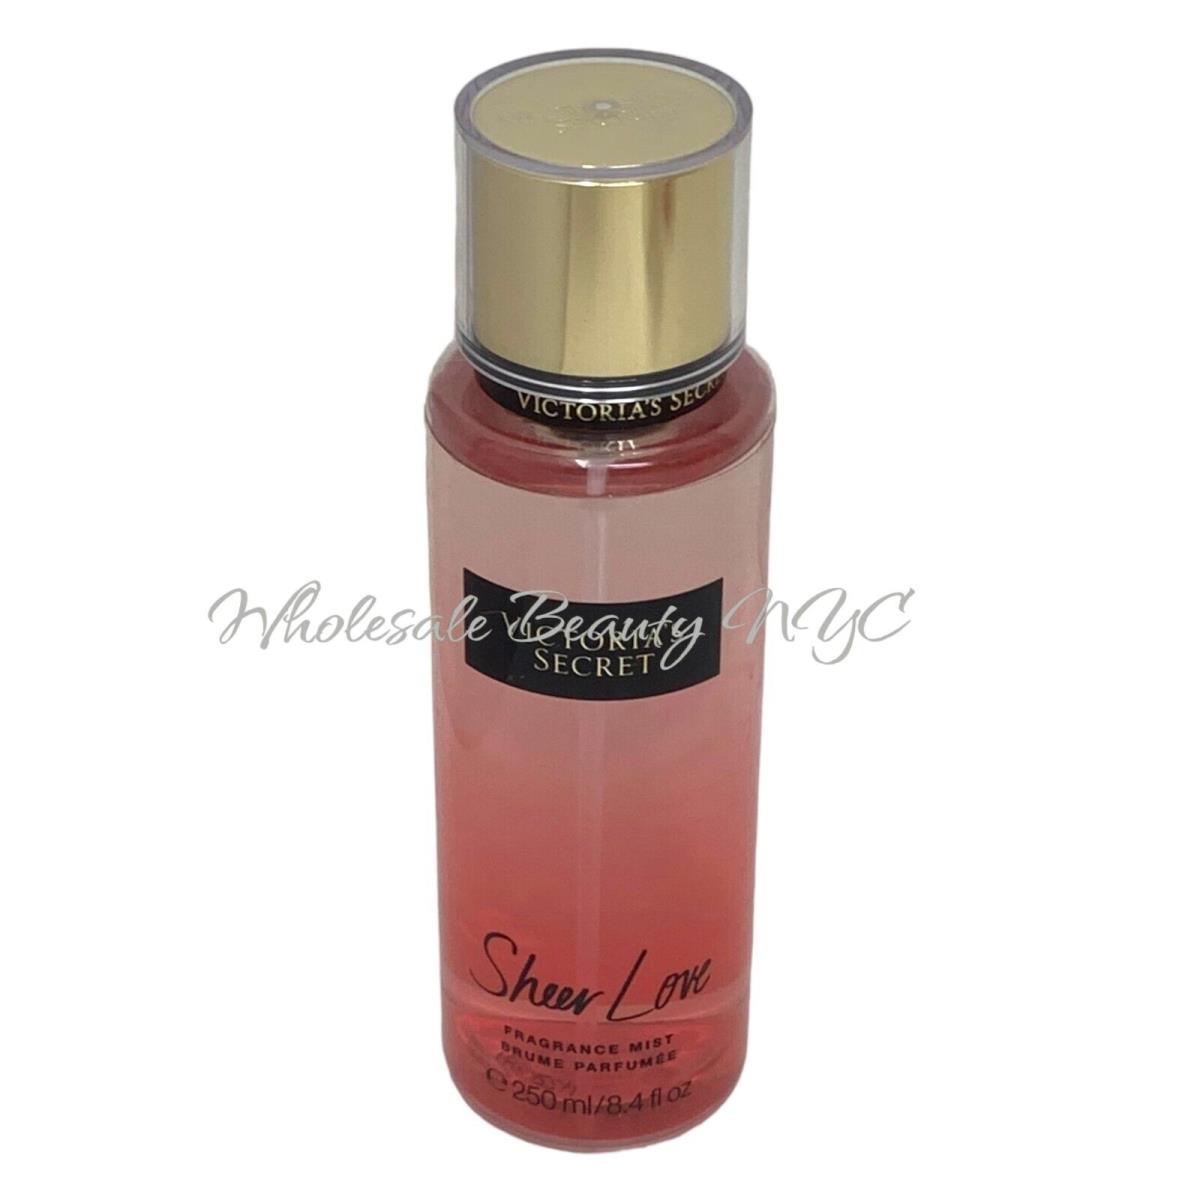 Victoria`s Secret Sheer Love Fragrance Mist 8.4 Oz/100 ml Limited Edition